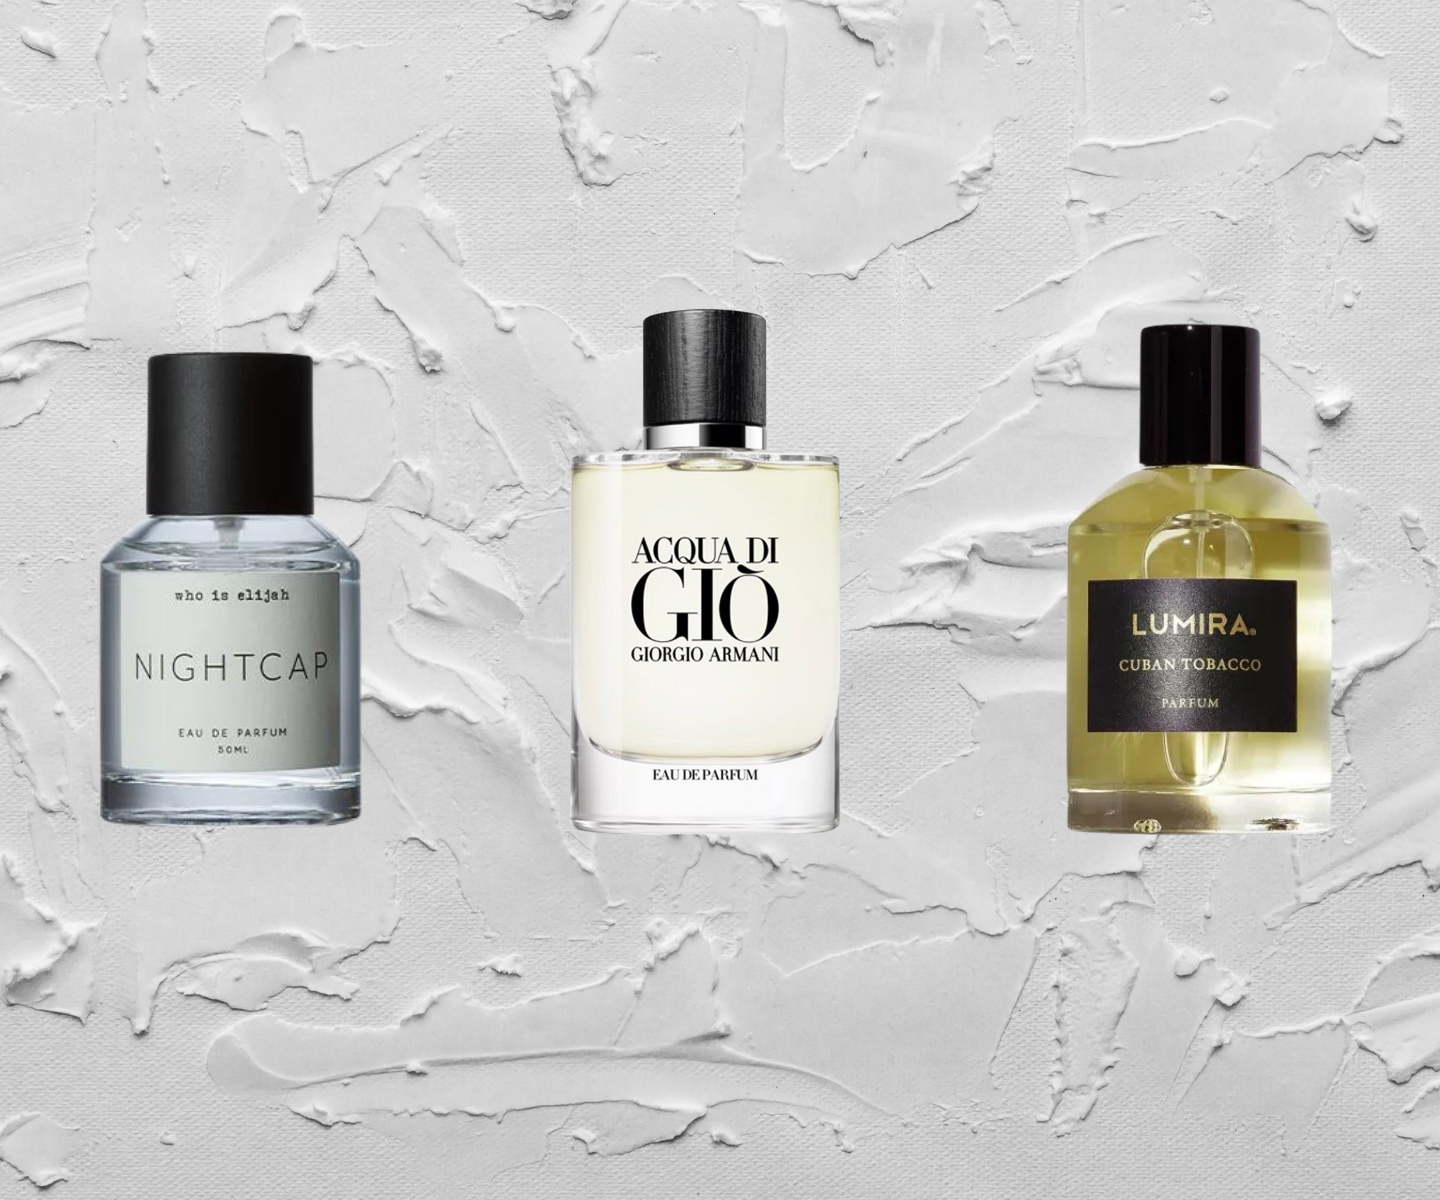 Top 10 Best Fragrances for Men This Summer  Best fragrance for men, Best  fragrances, Men perfume